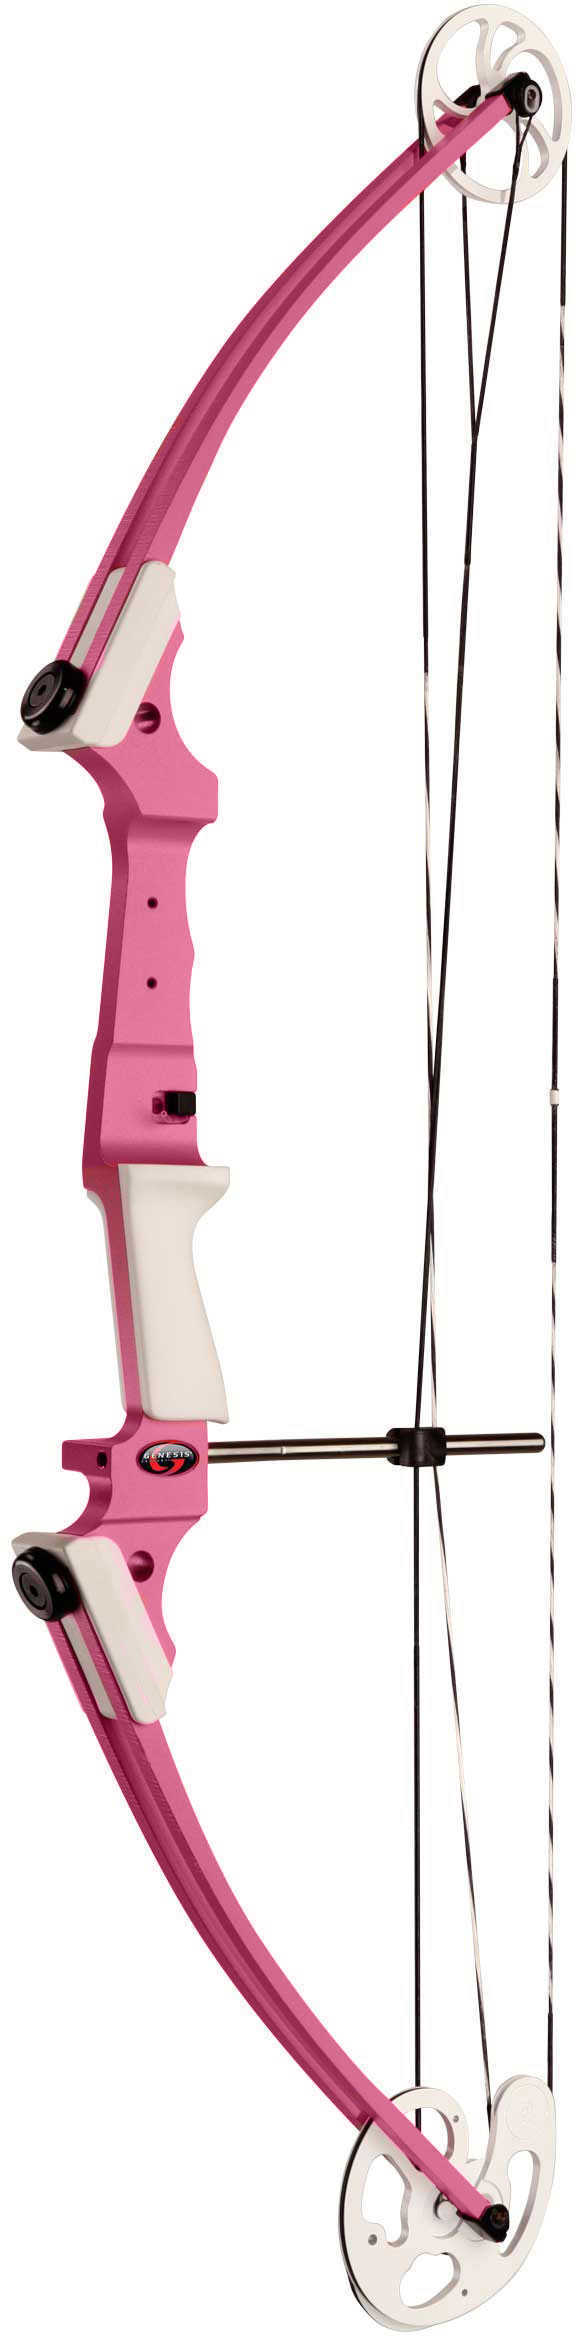 Genesis Bow Pink RH Model: 12073